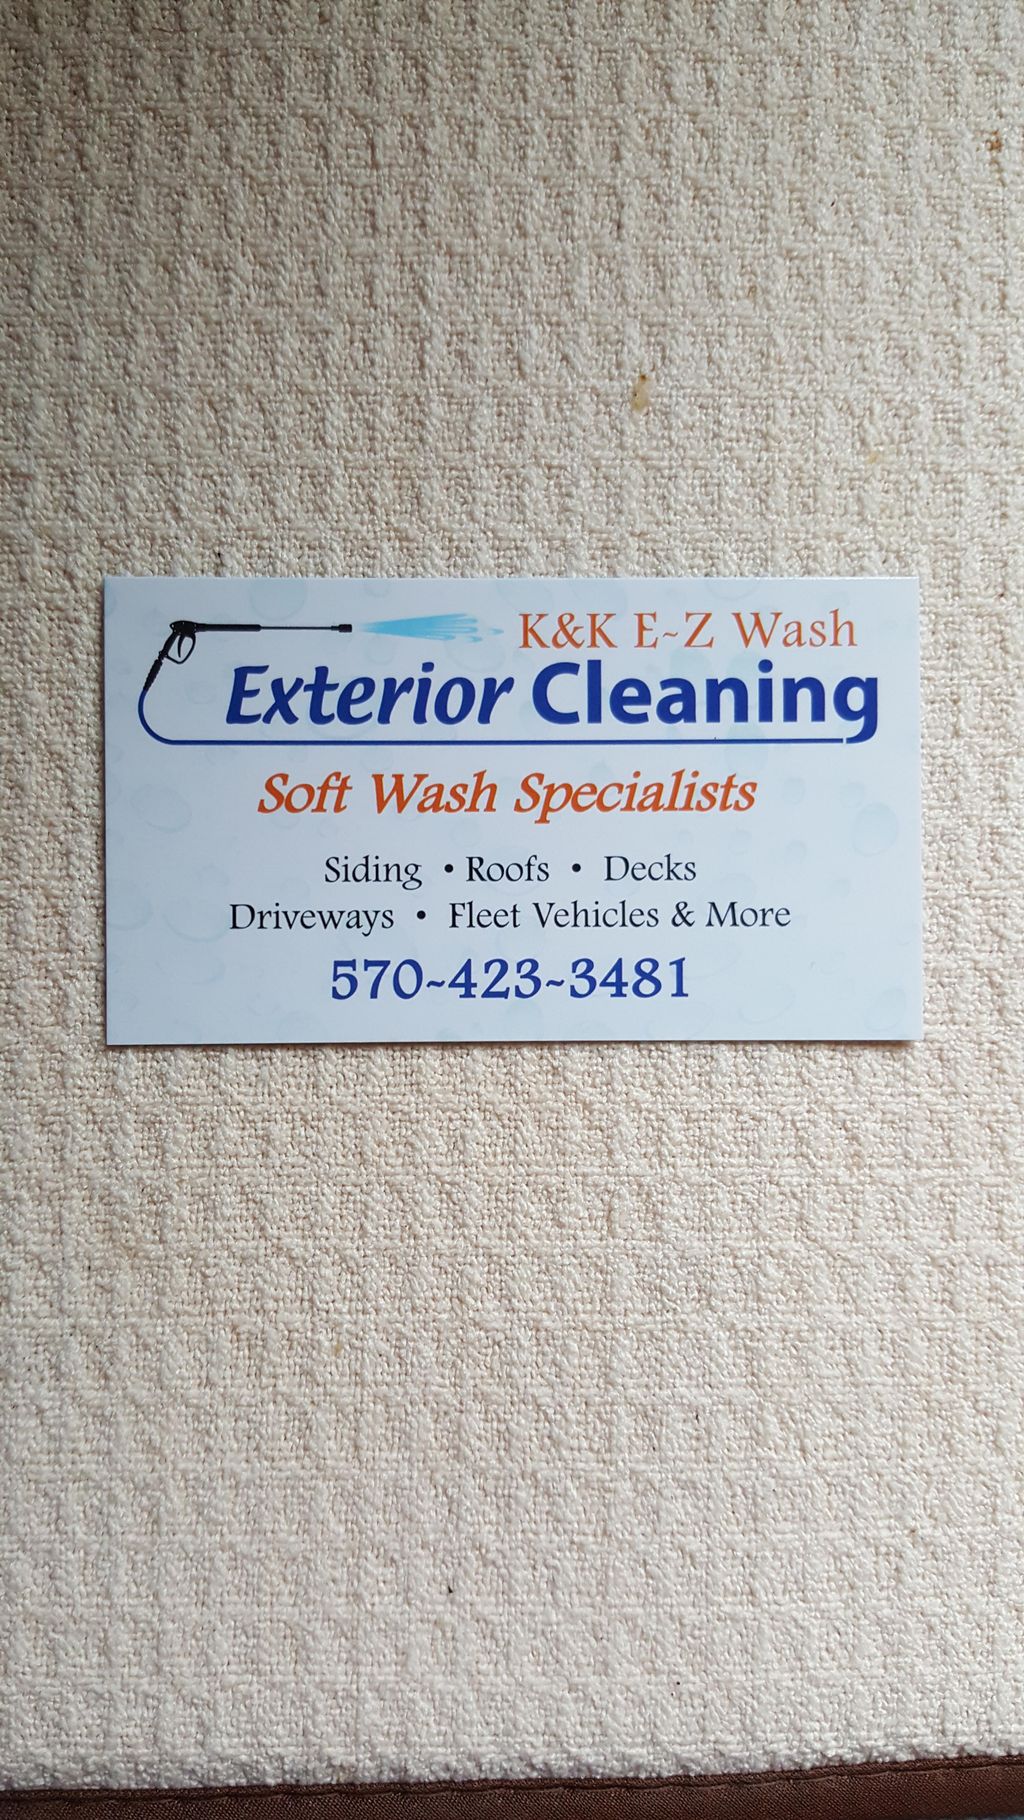 K&K EZ WASH EXTERIOR CLEANING